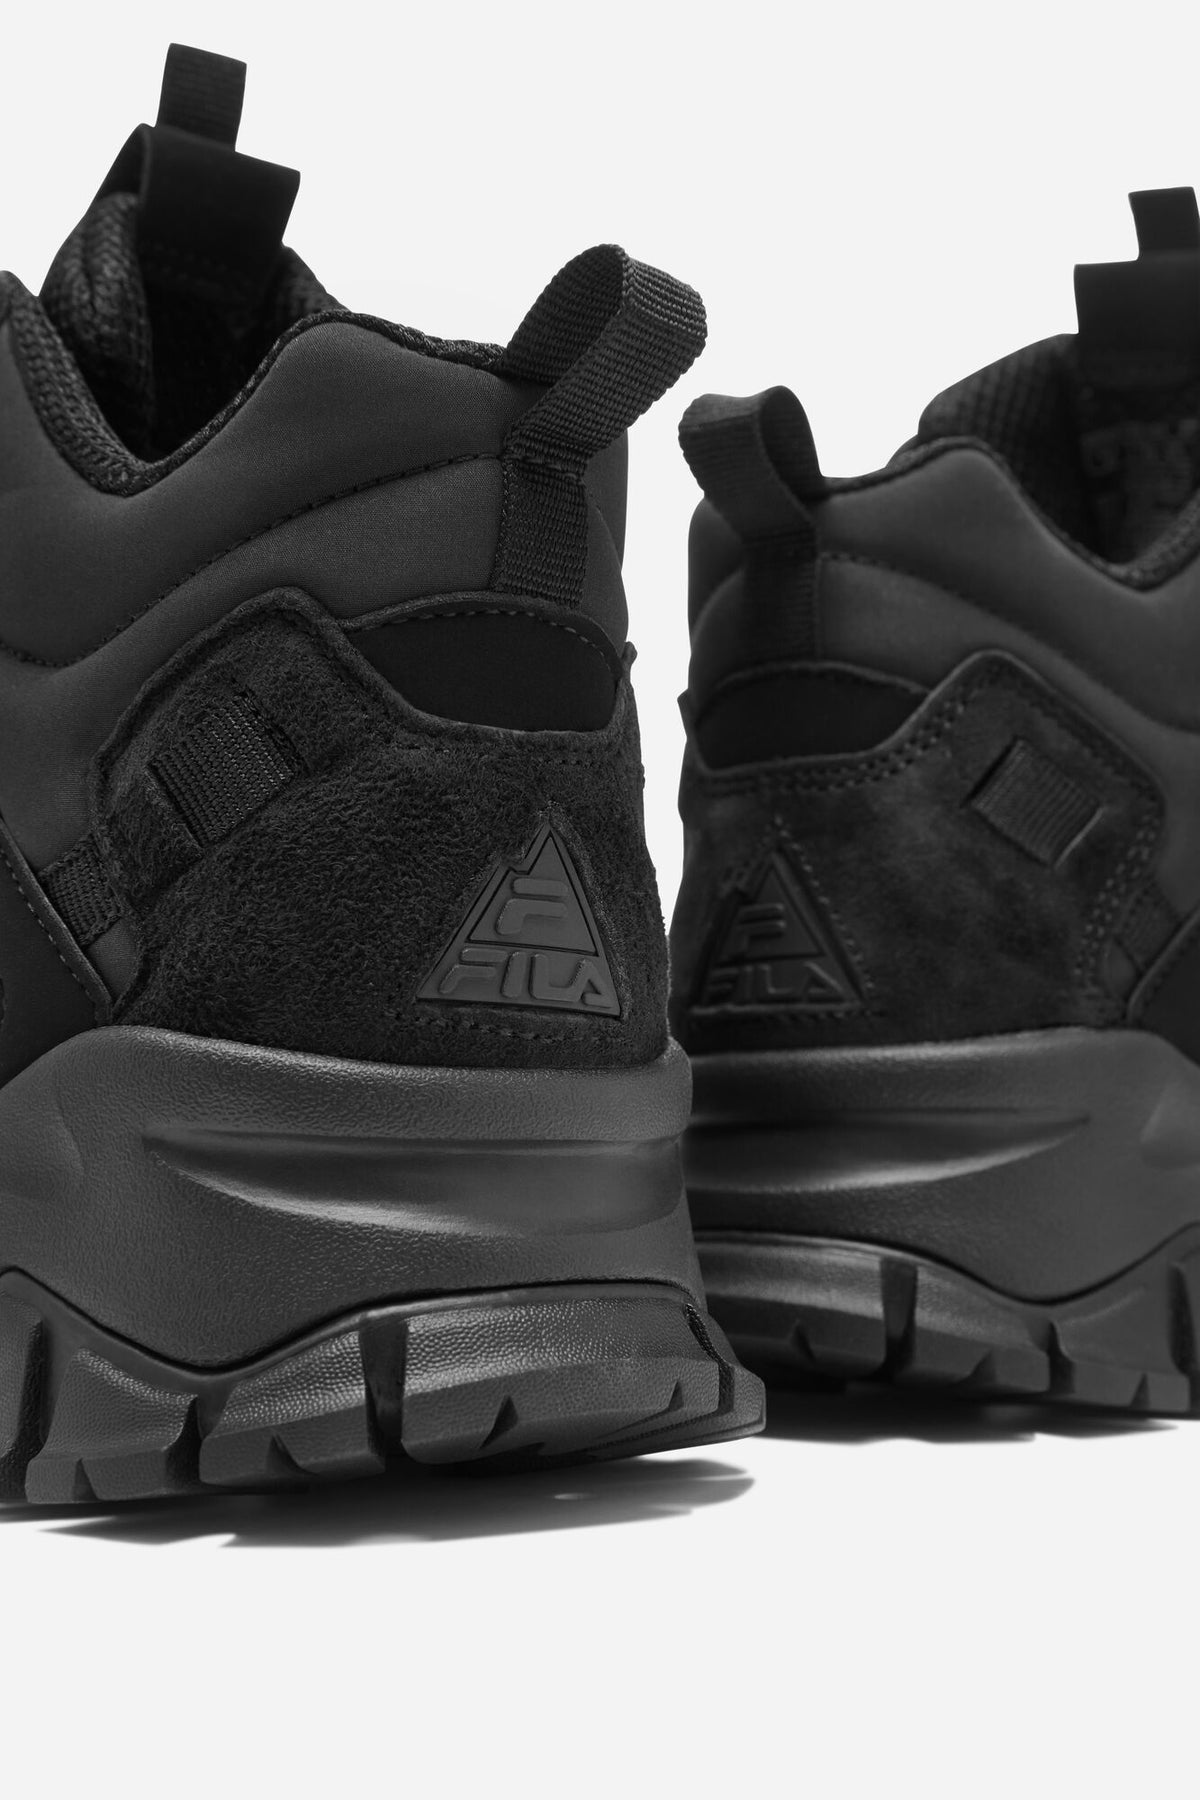 Fila Ray Tracer II 2 Mid Sneaker Boot - Black